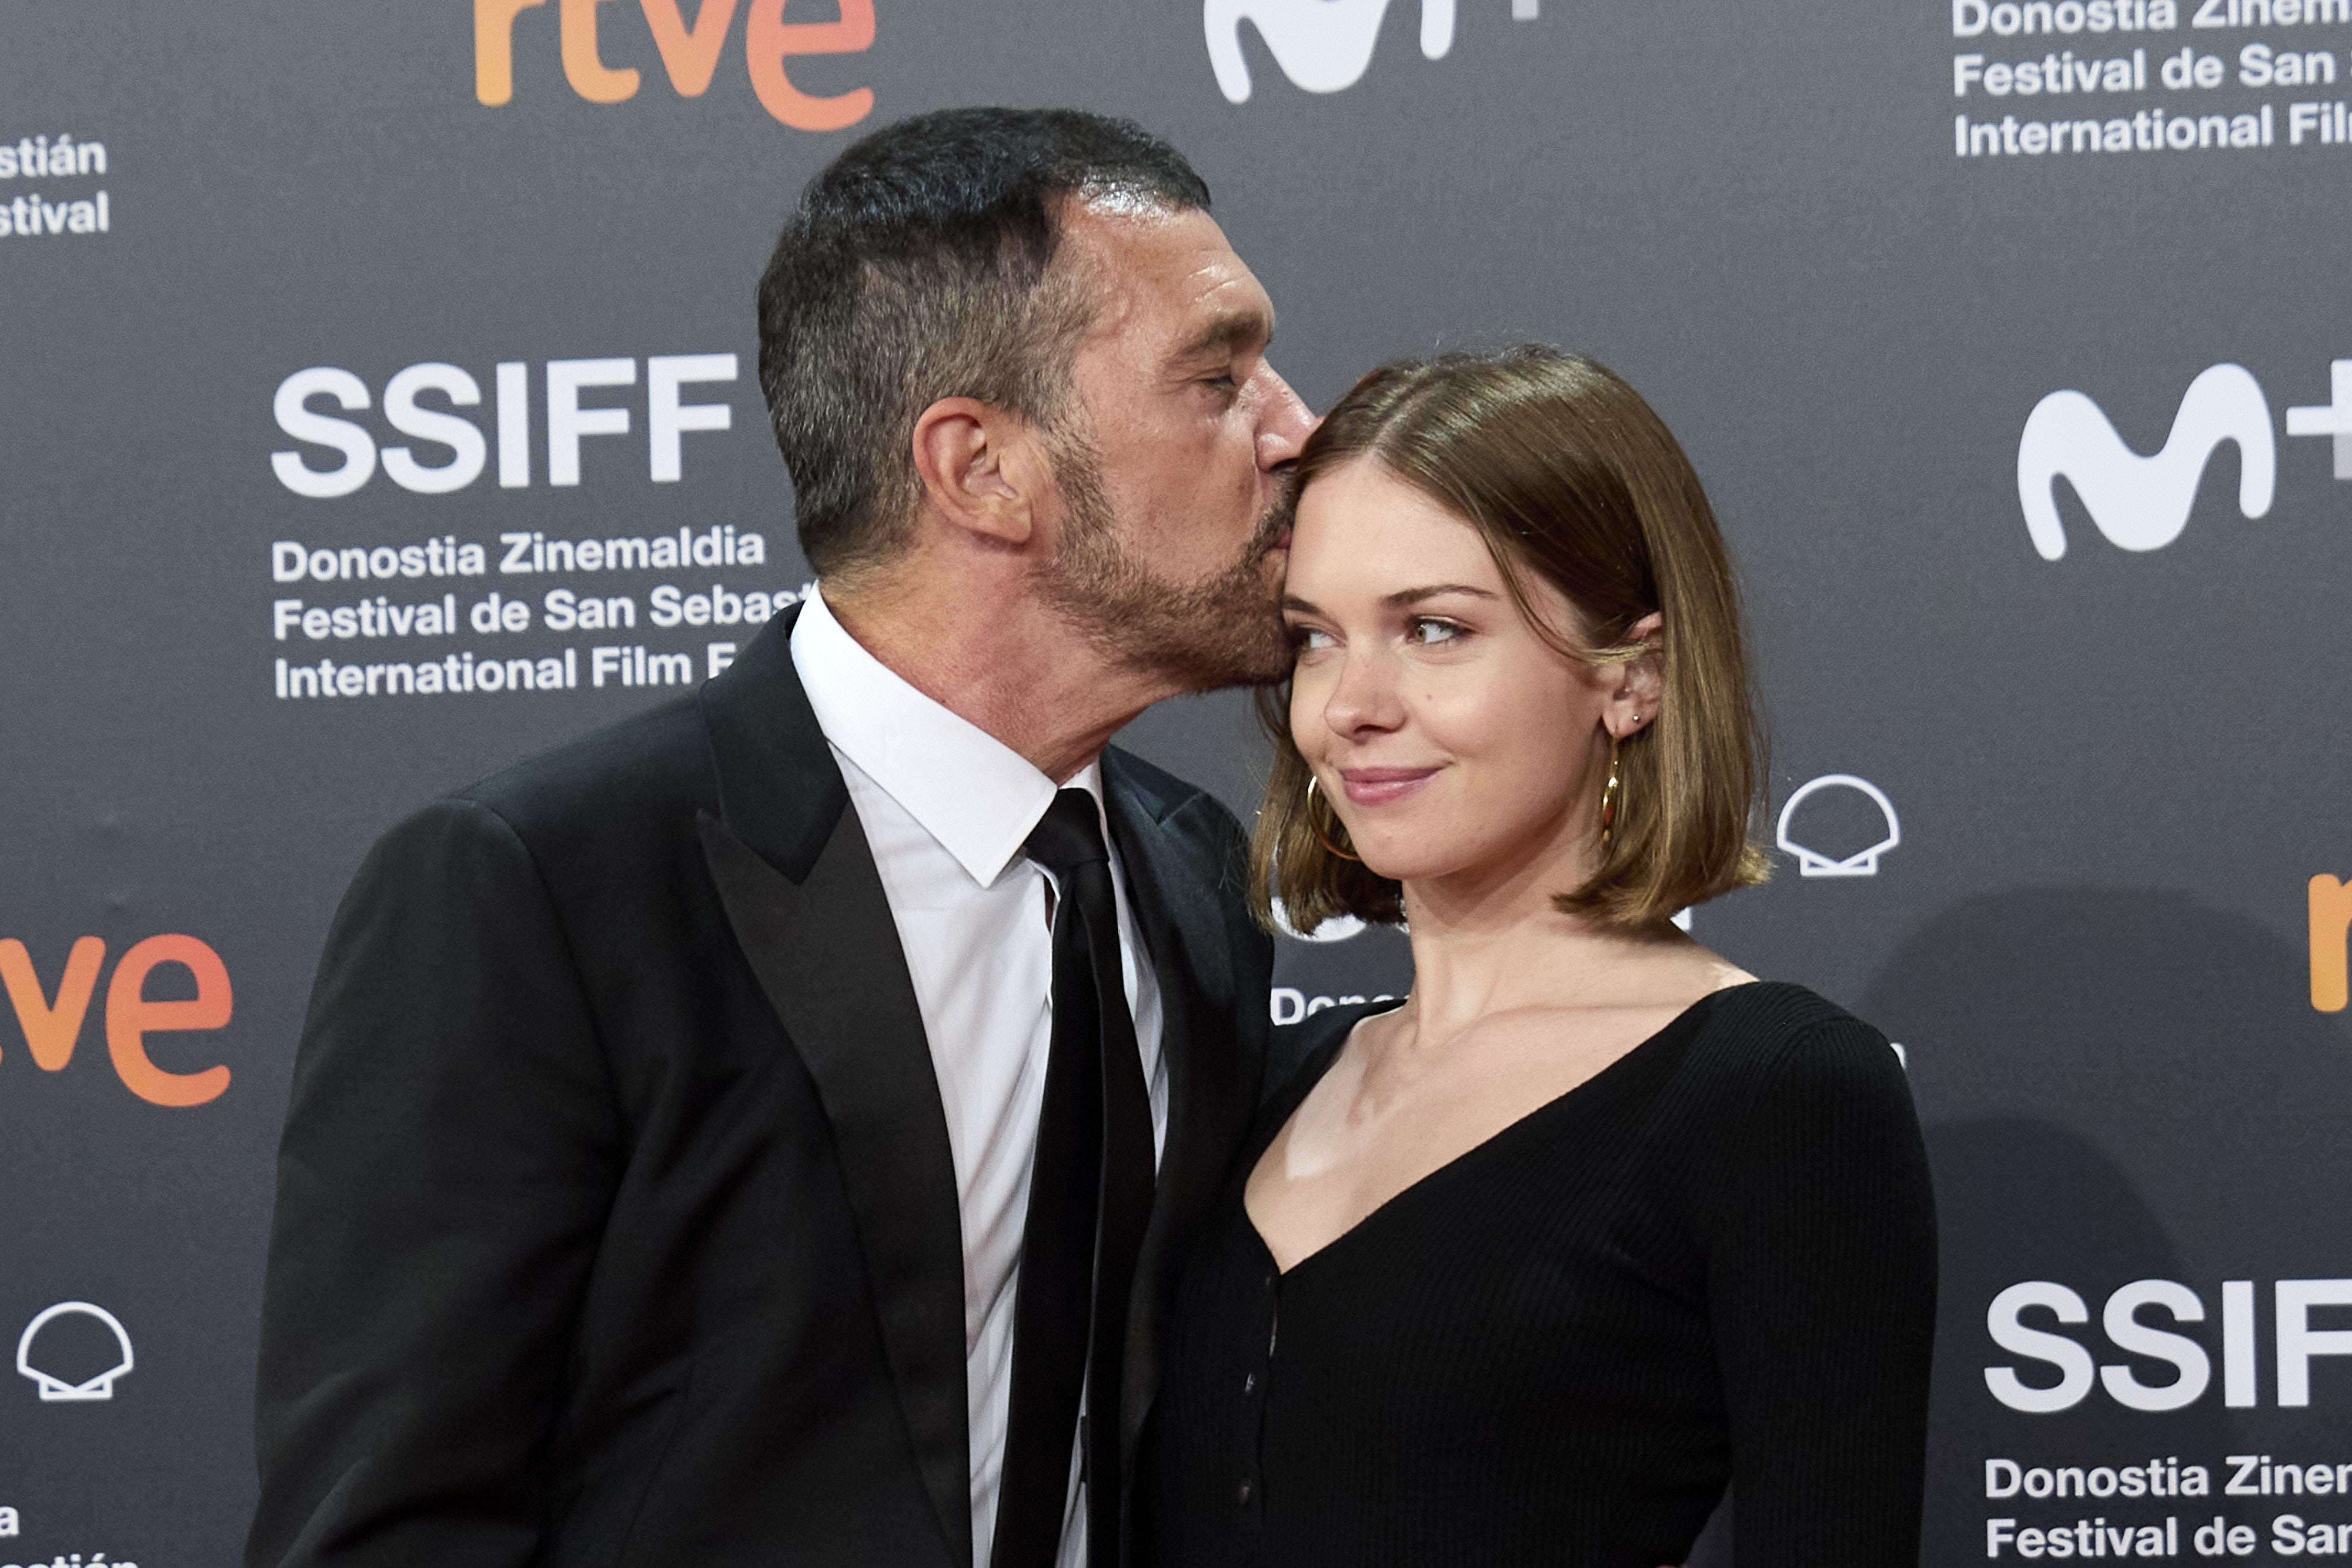 Antonio and Stella Banderas at the 69th San Sebastian Film Festival in San Sebastian, Spain on September 17, 2021 | Source: Getty Images